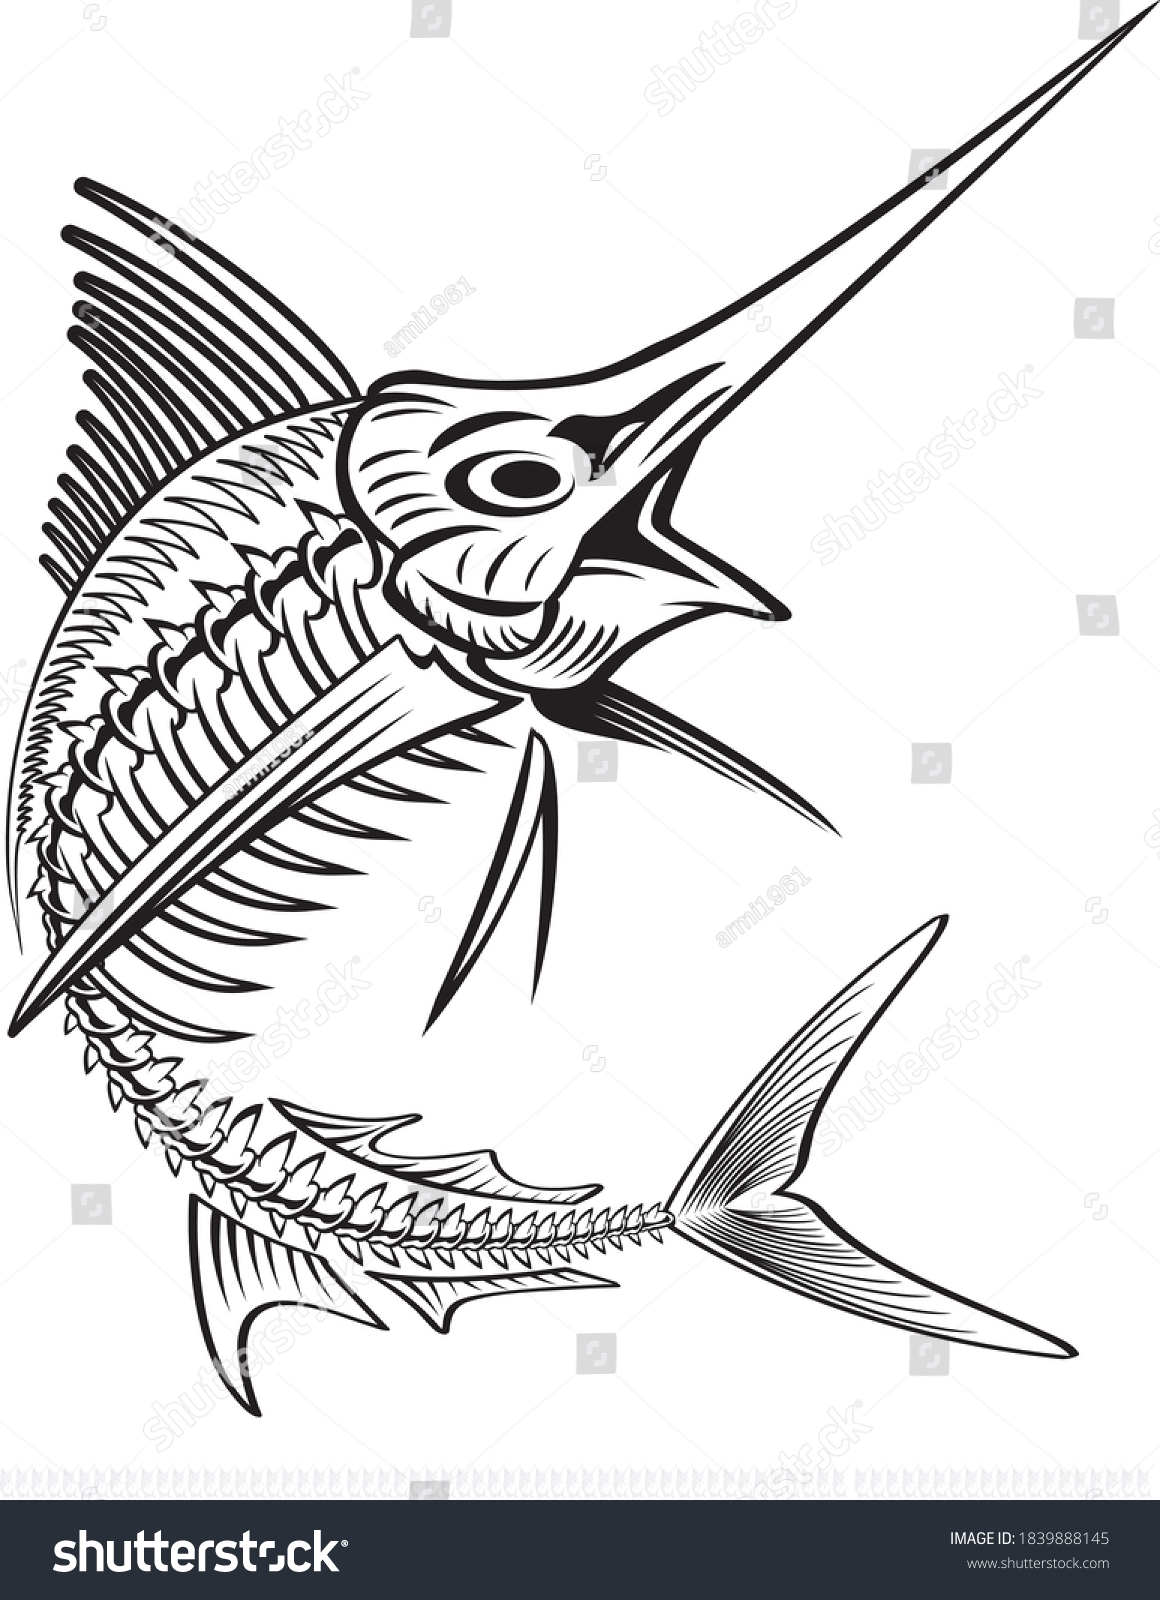 SVG of vector illustration of skeleton marlin svg